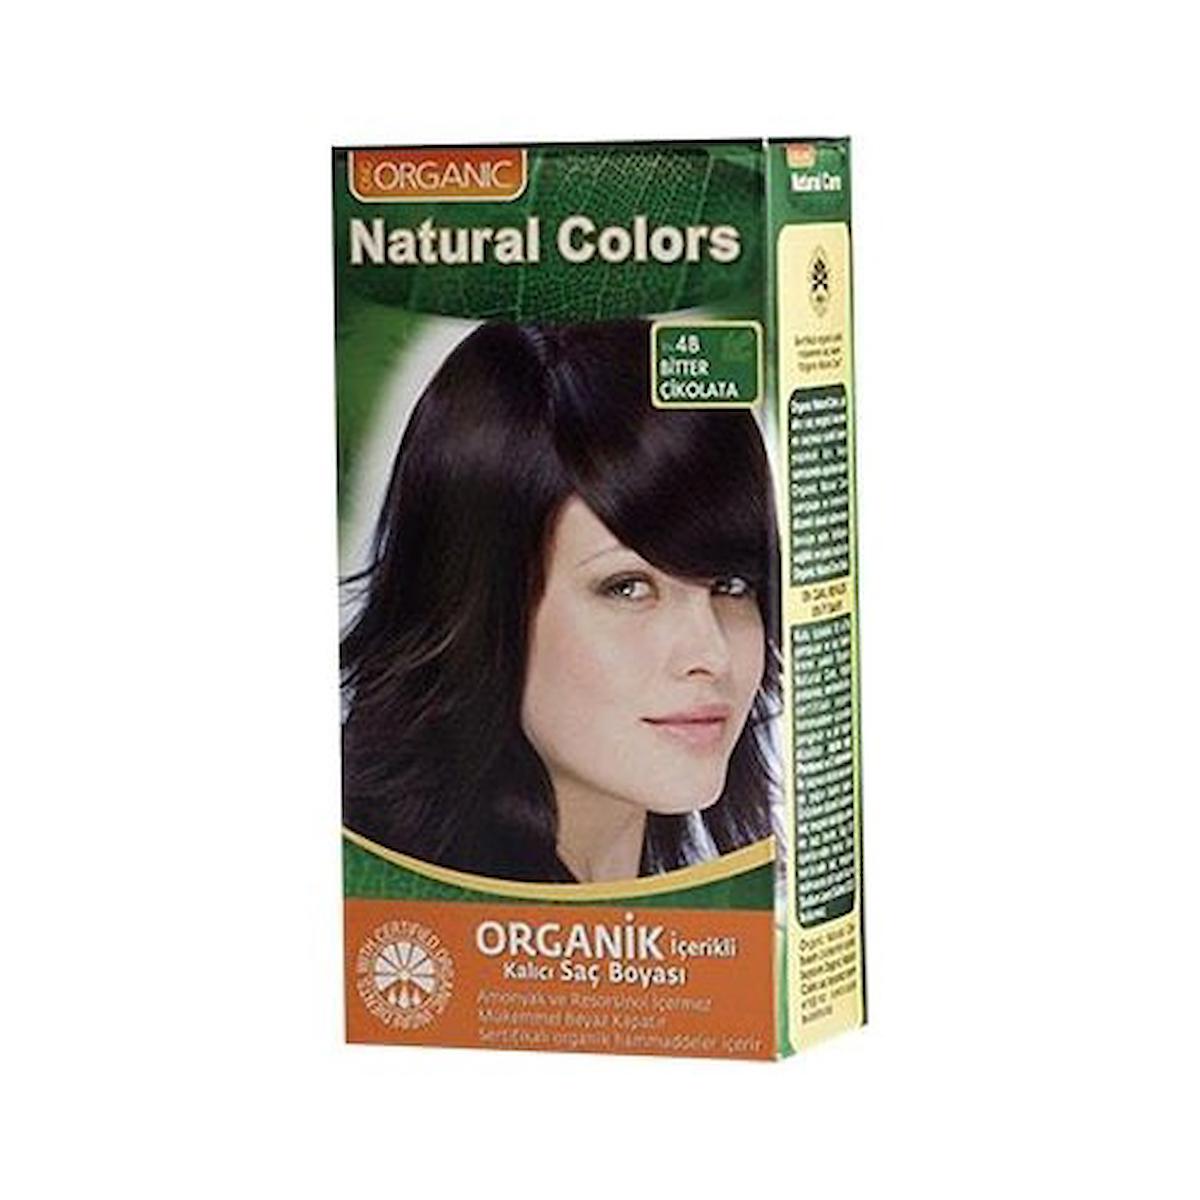 Natural Colors 4B Bitter Çikolata Organik Krem Saç Boyası